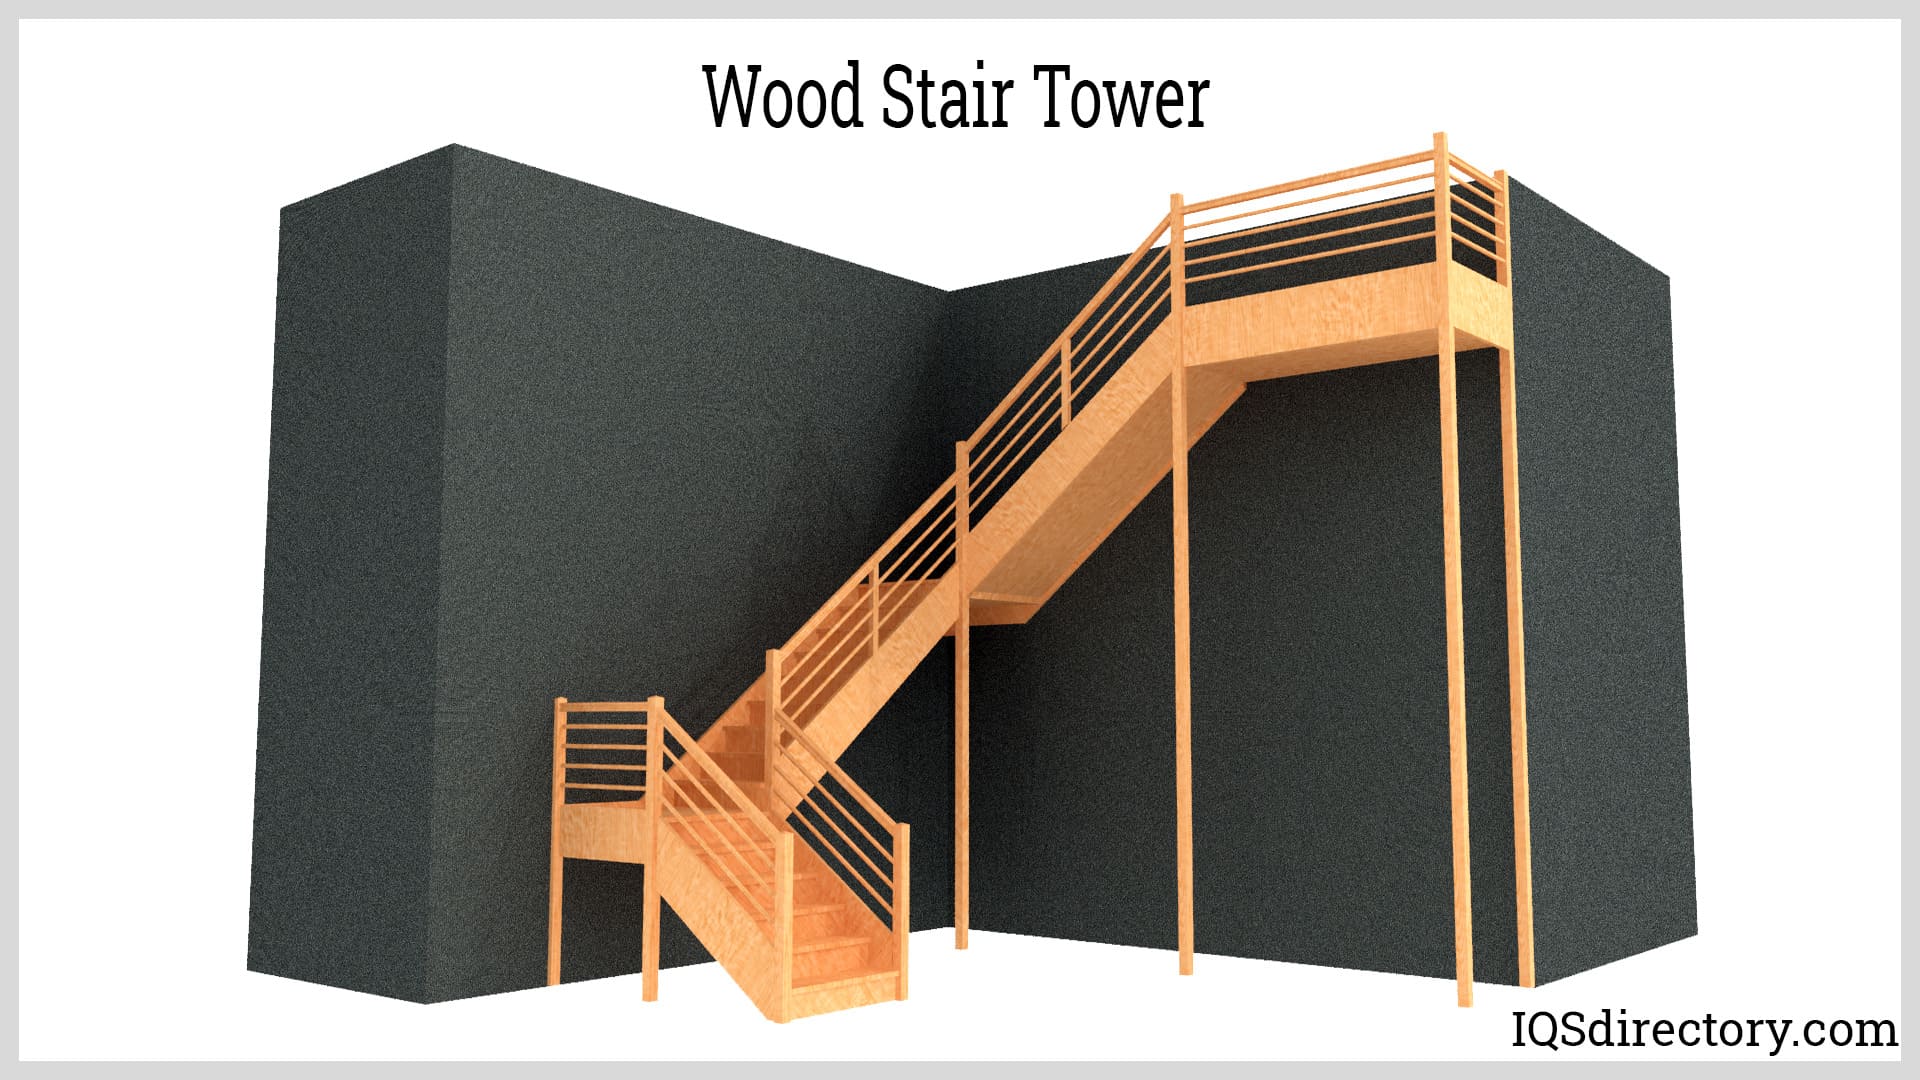 Wood Stair Tower